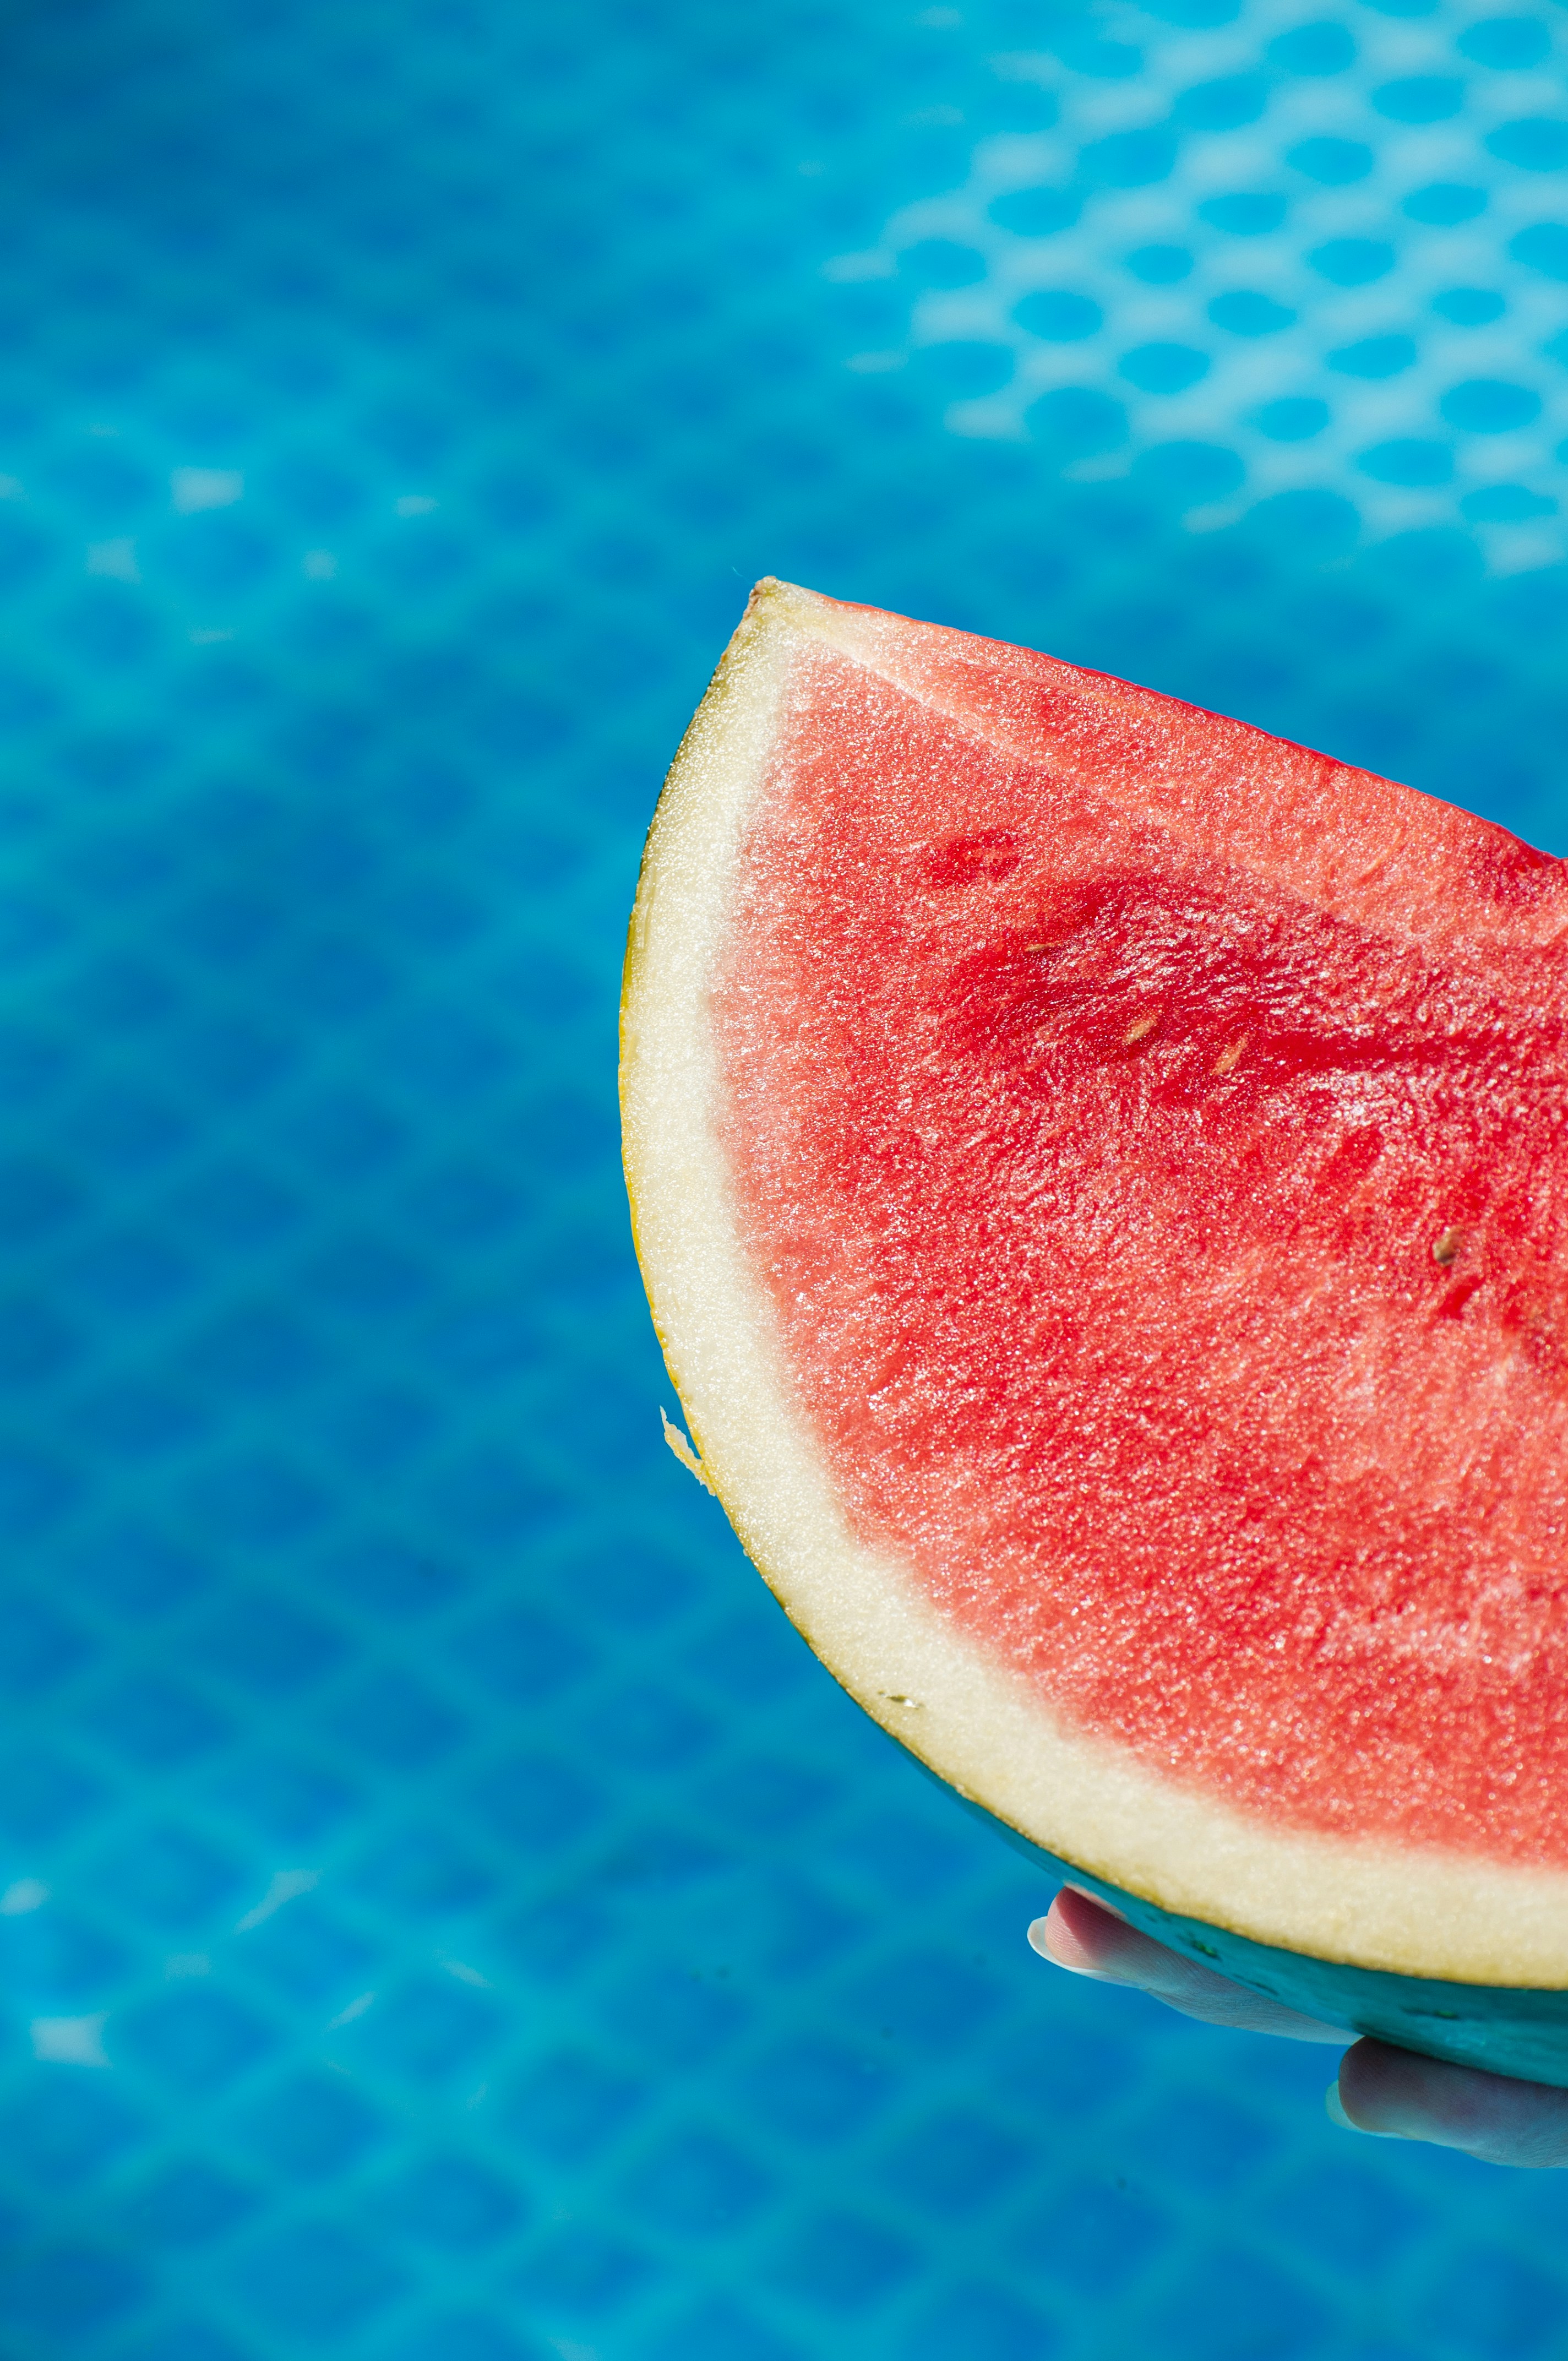 sliced watermelon on blue surface